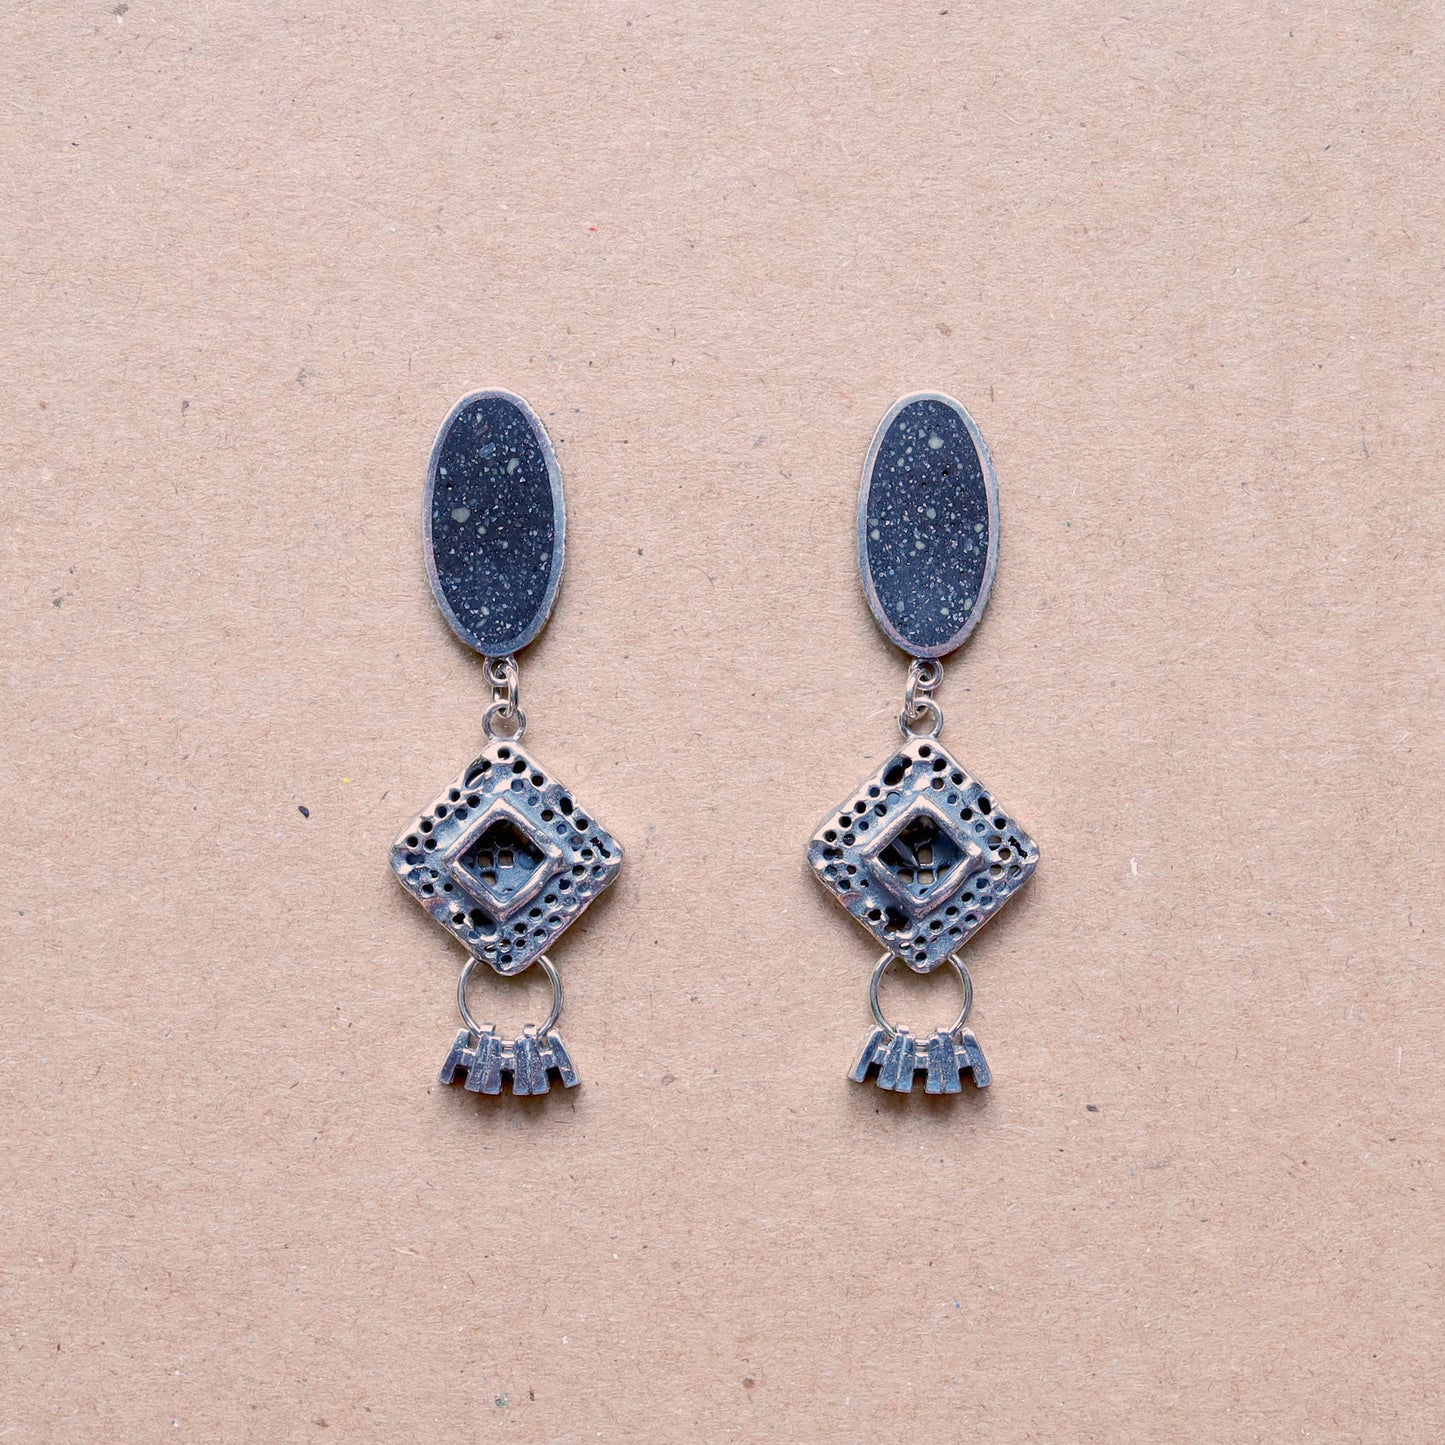 Plaintain - Plantain earrings